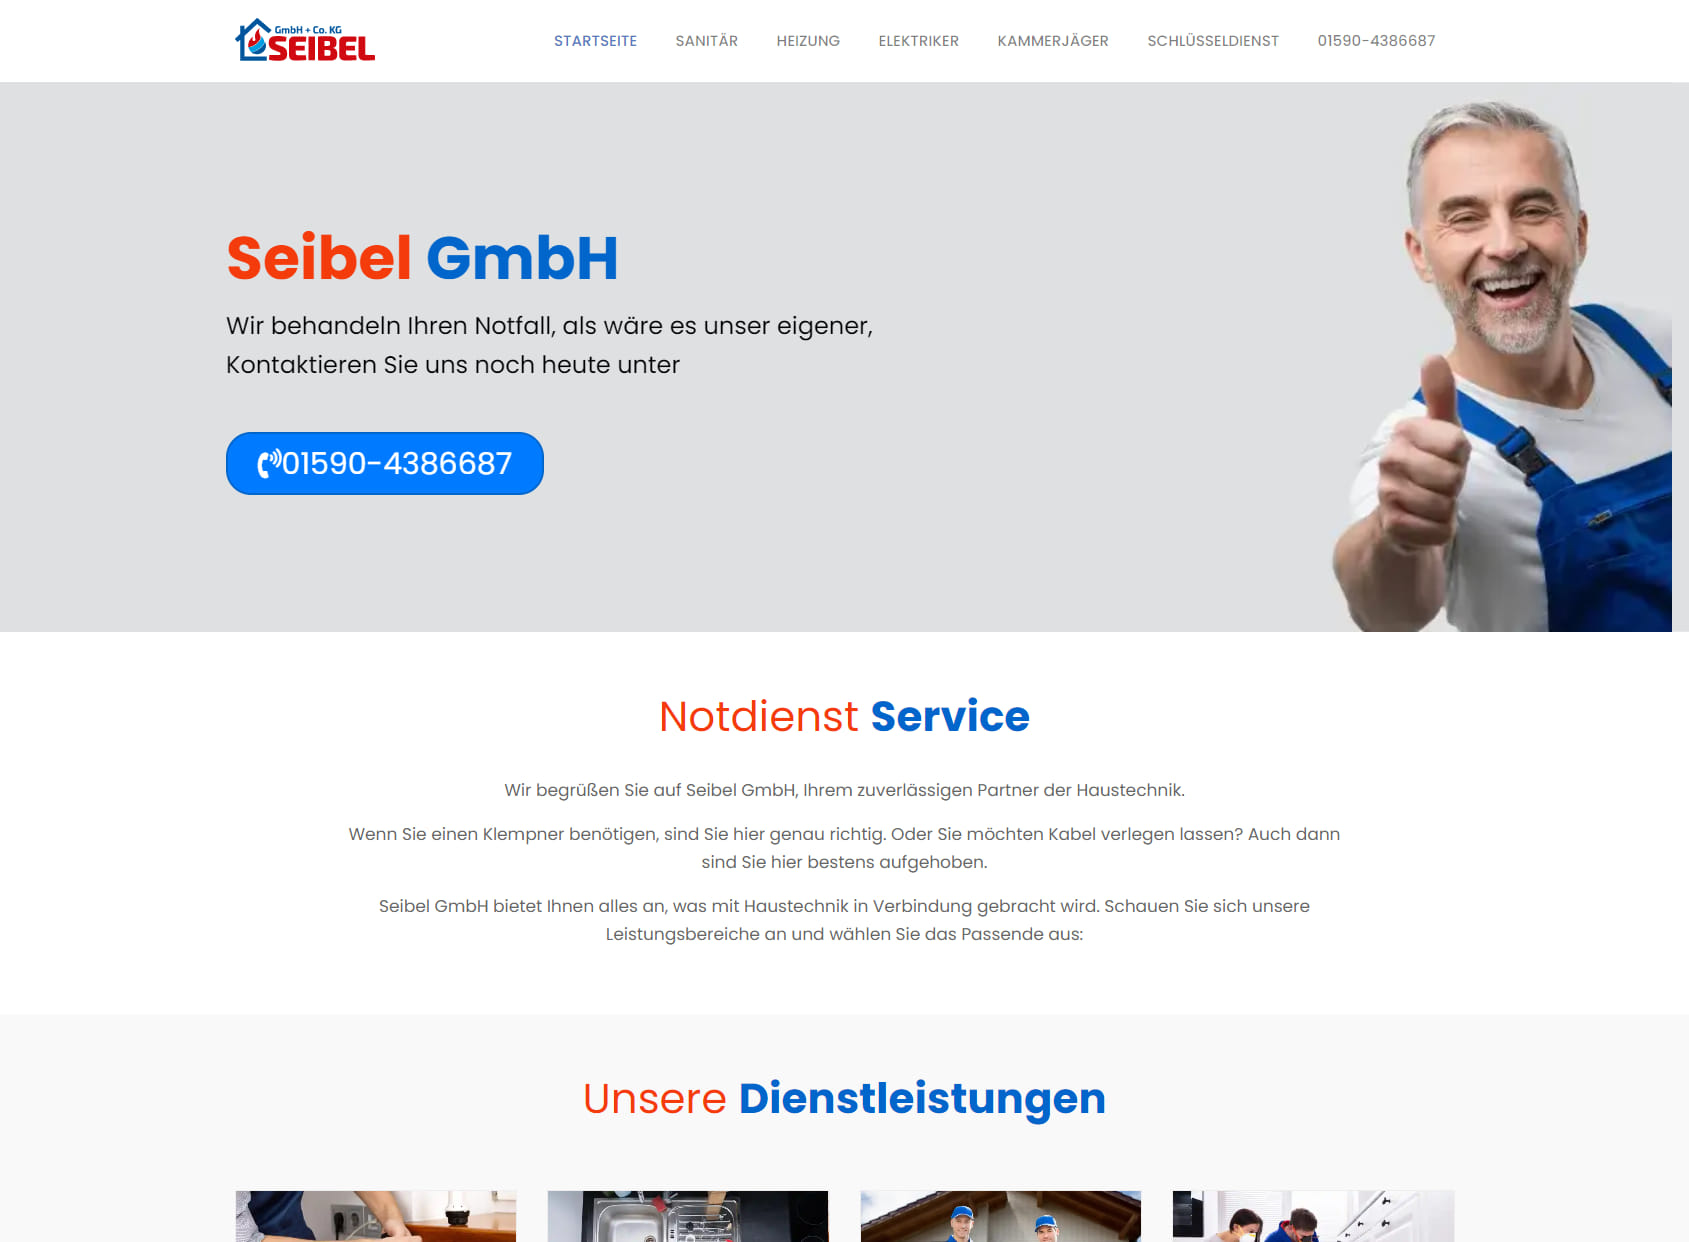 Seibel GmbH & Co KG